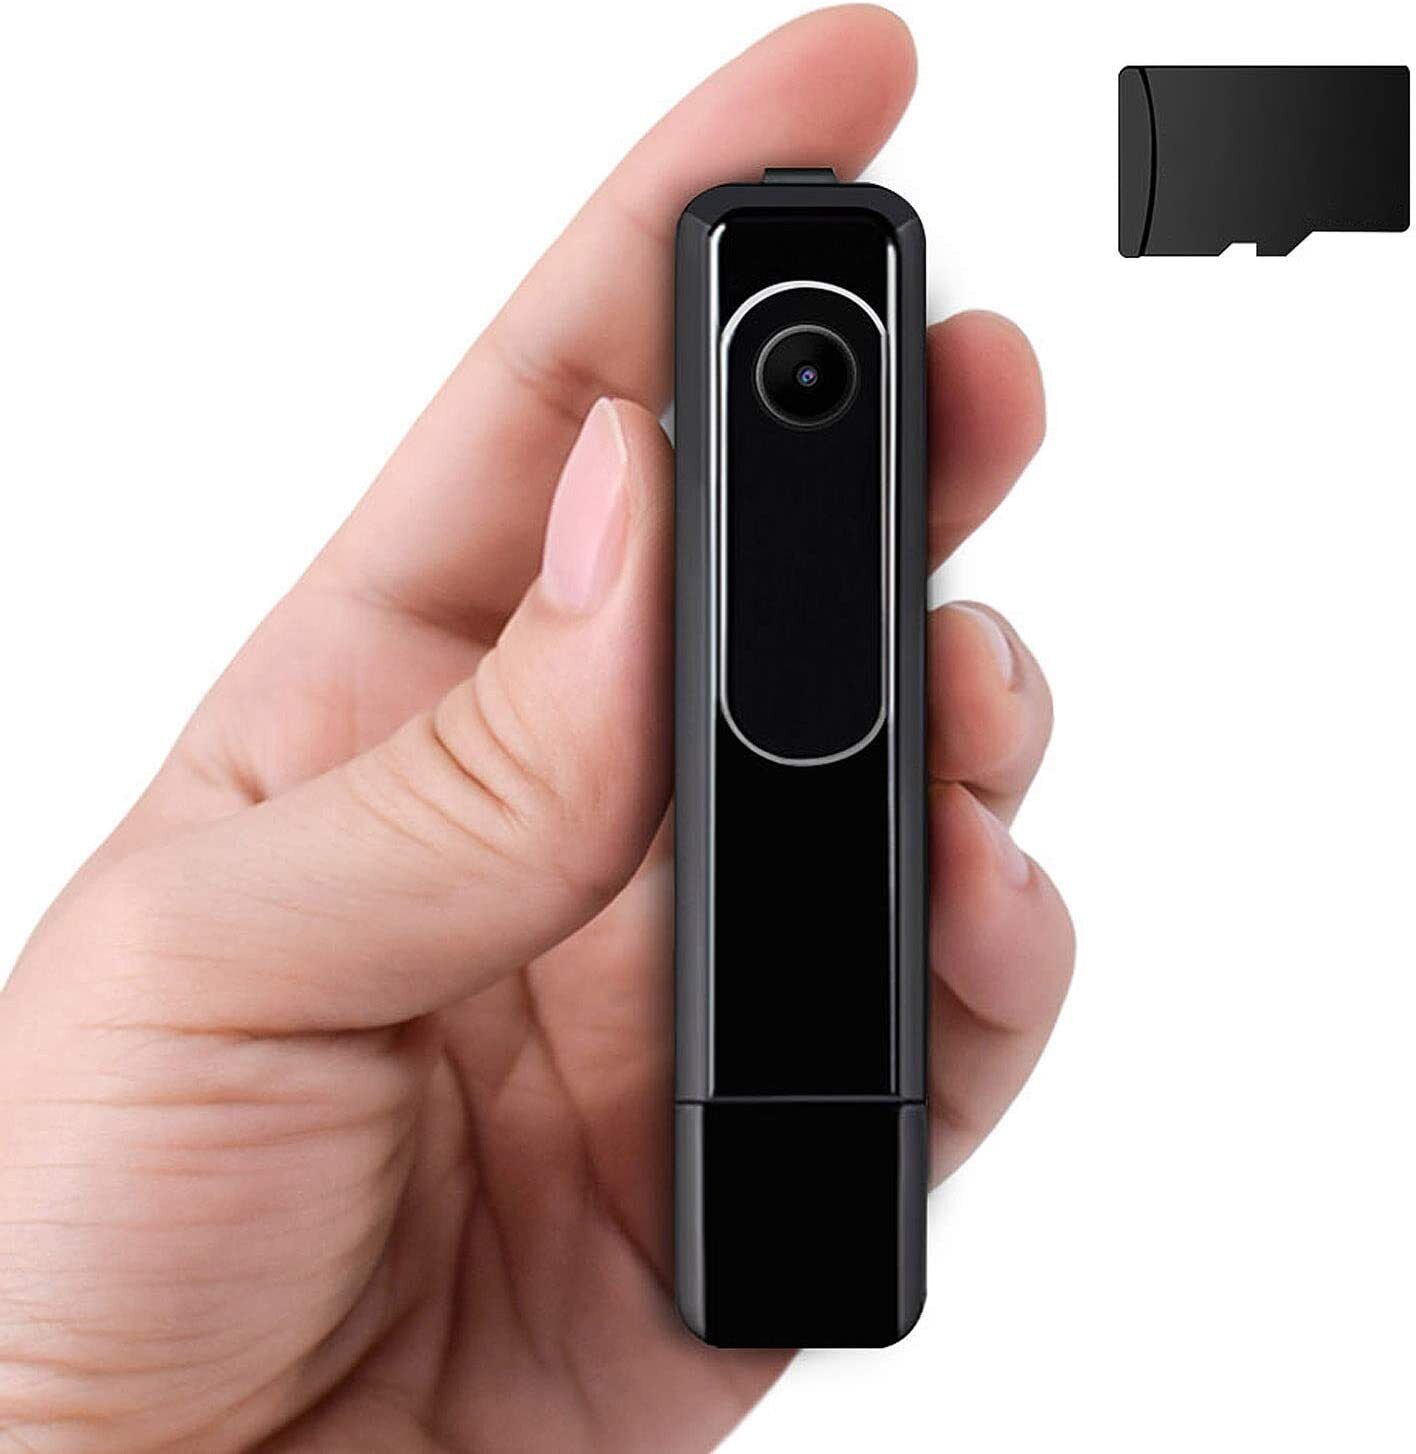 Body Camera Hd 1080p, Wearable Mini Hidden Spy Camera Wireless Portable Pen Cop